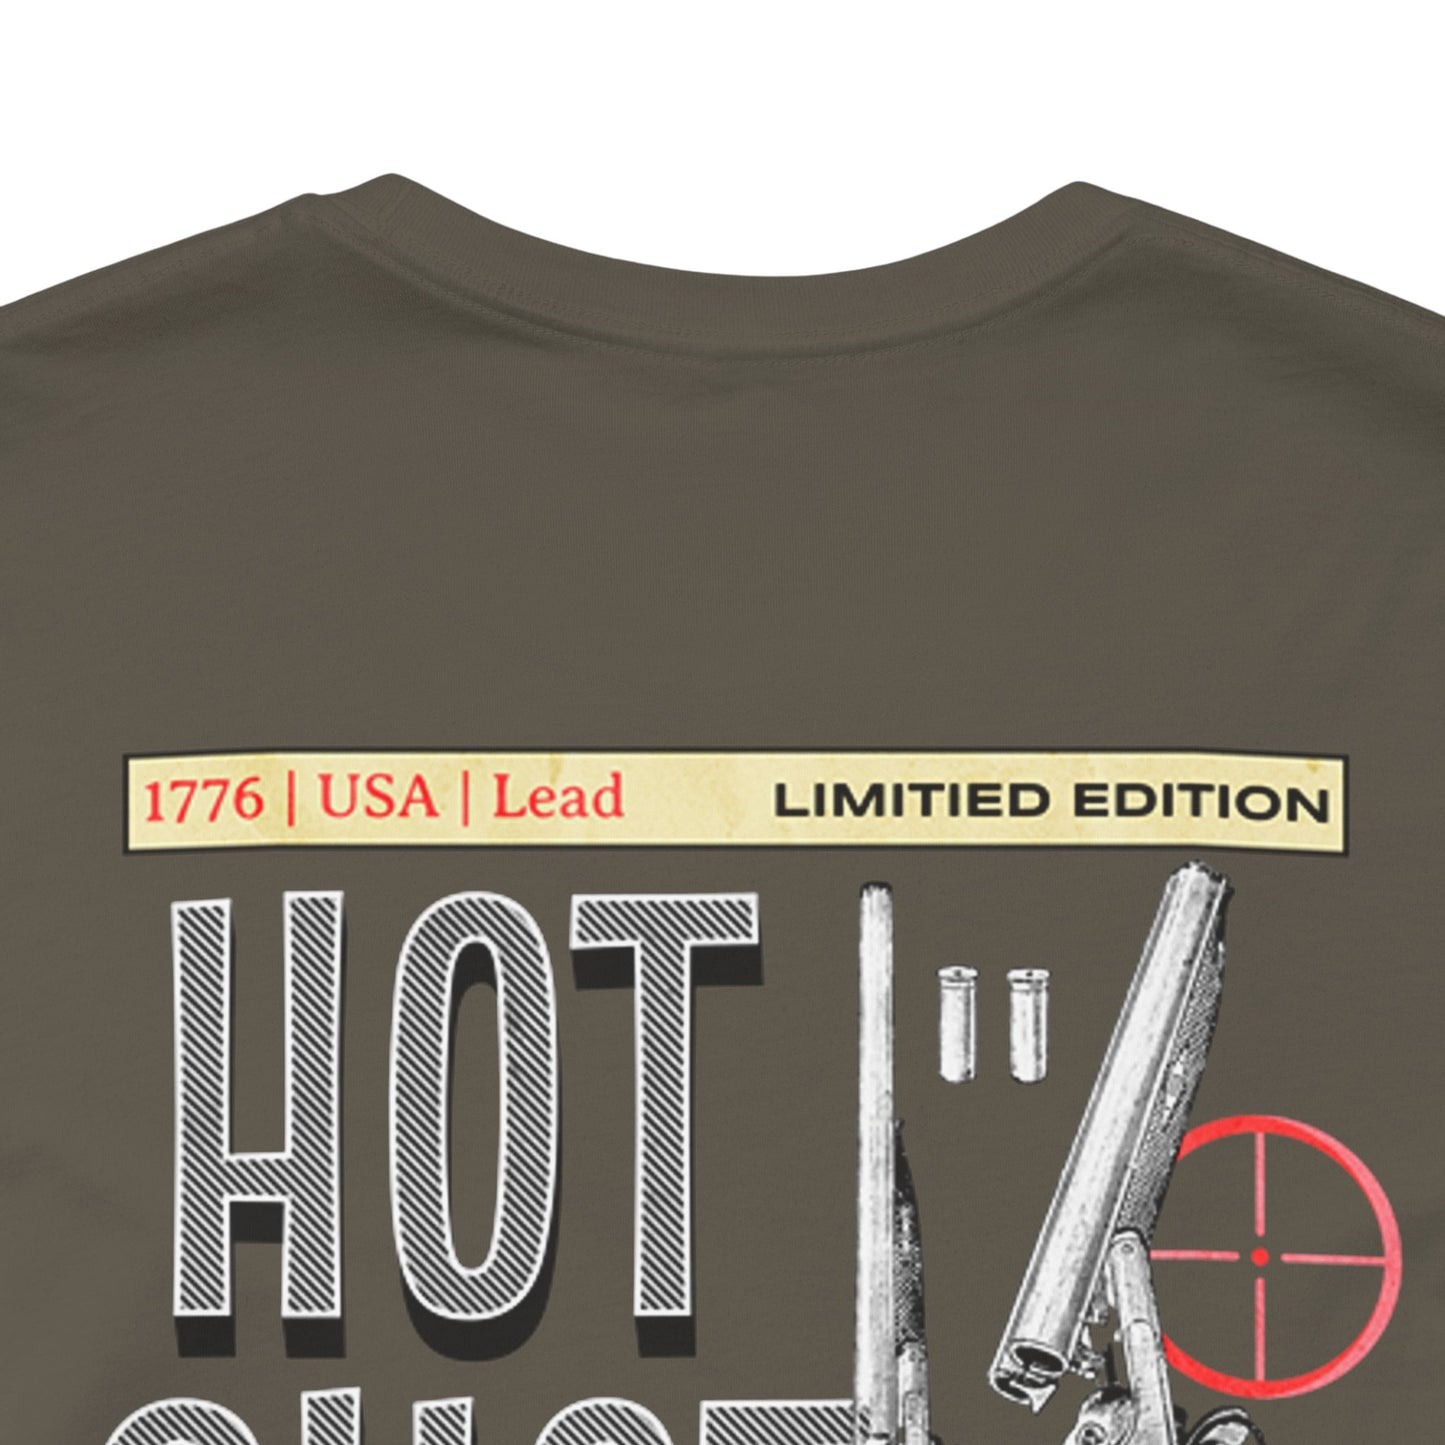 Hot Shot Magazine - T-Shirt